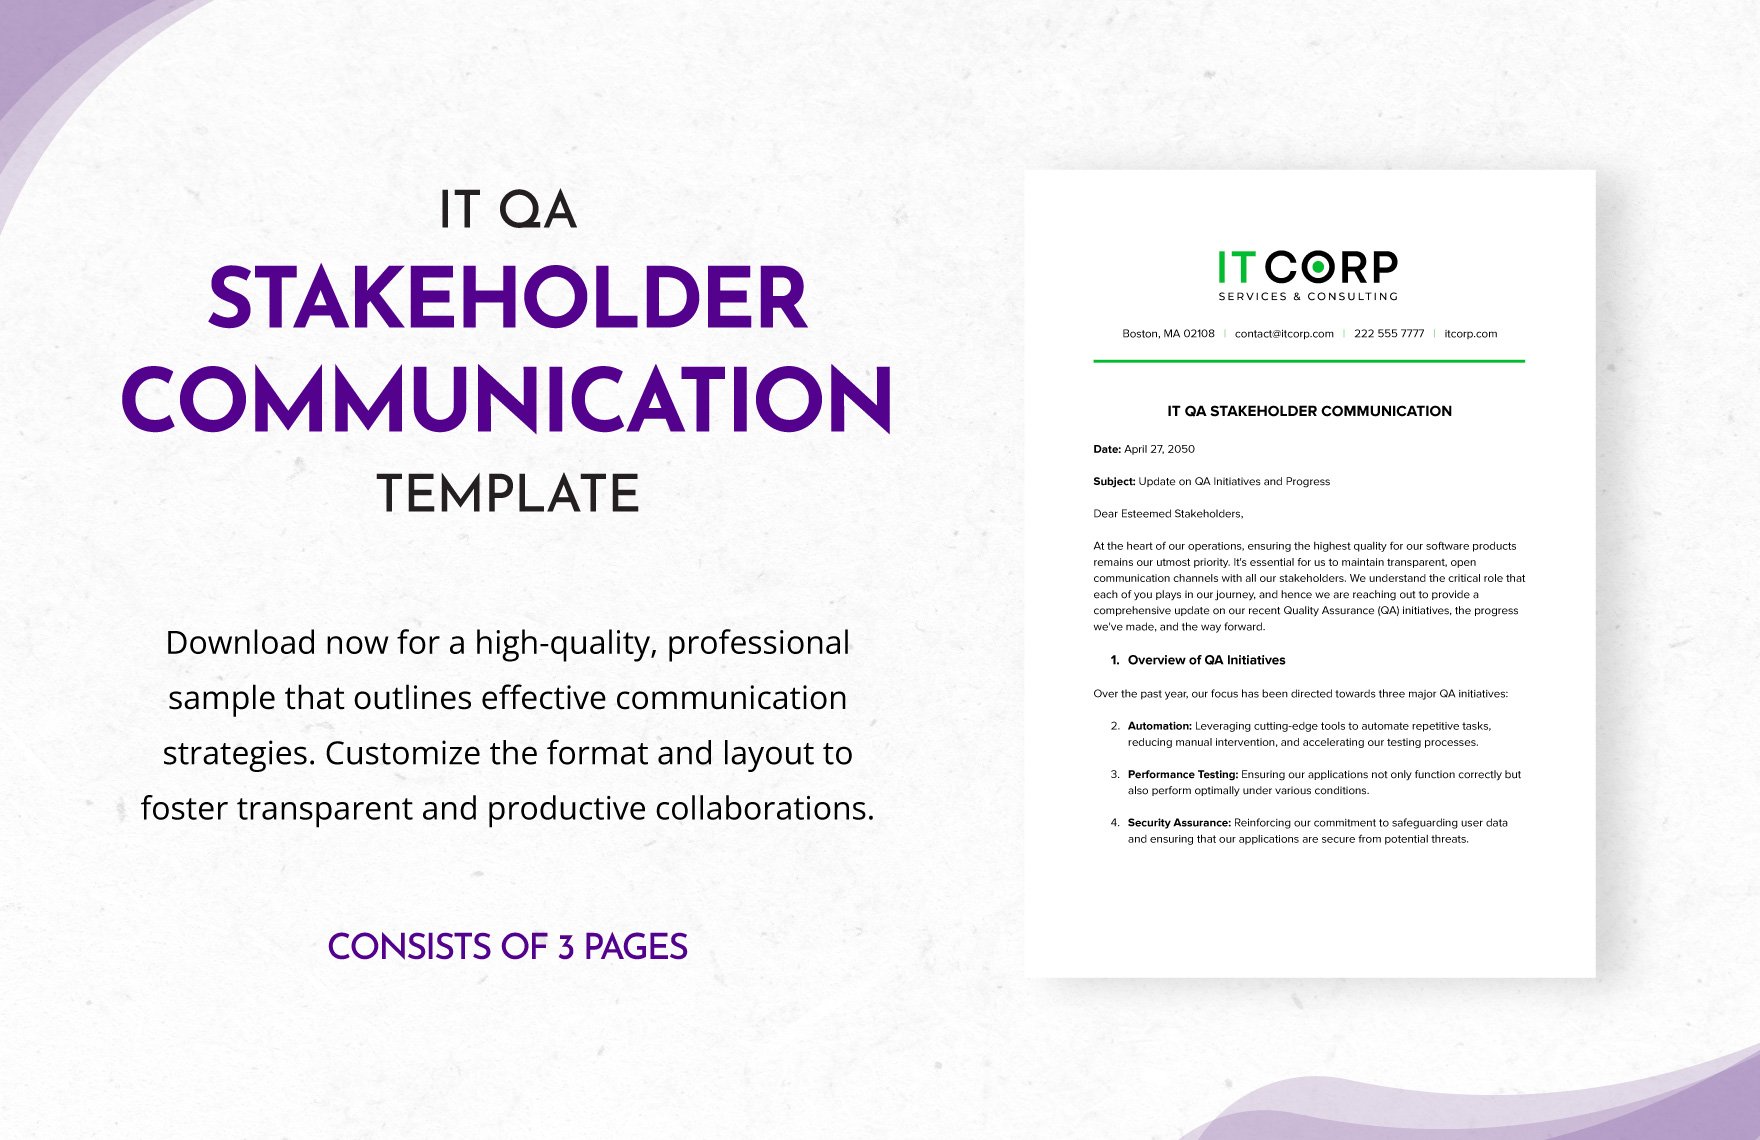 IT QA Stakeholder Communication Template